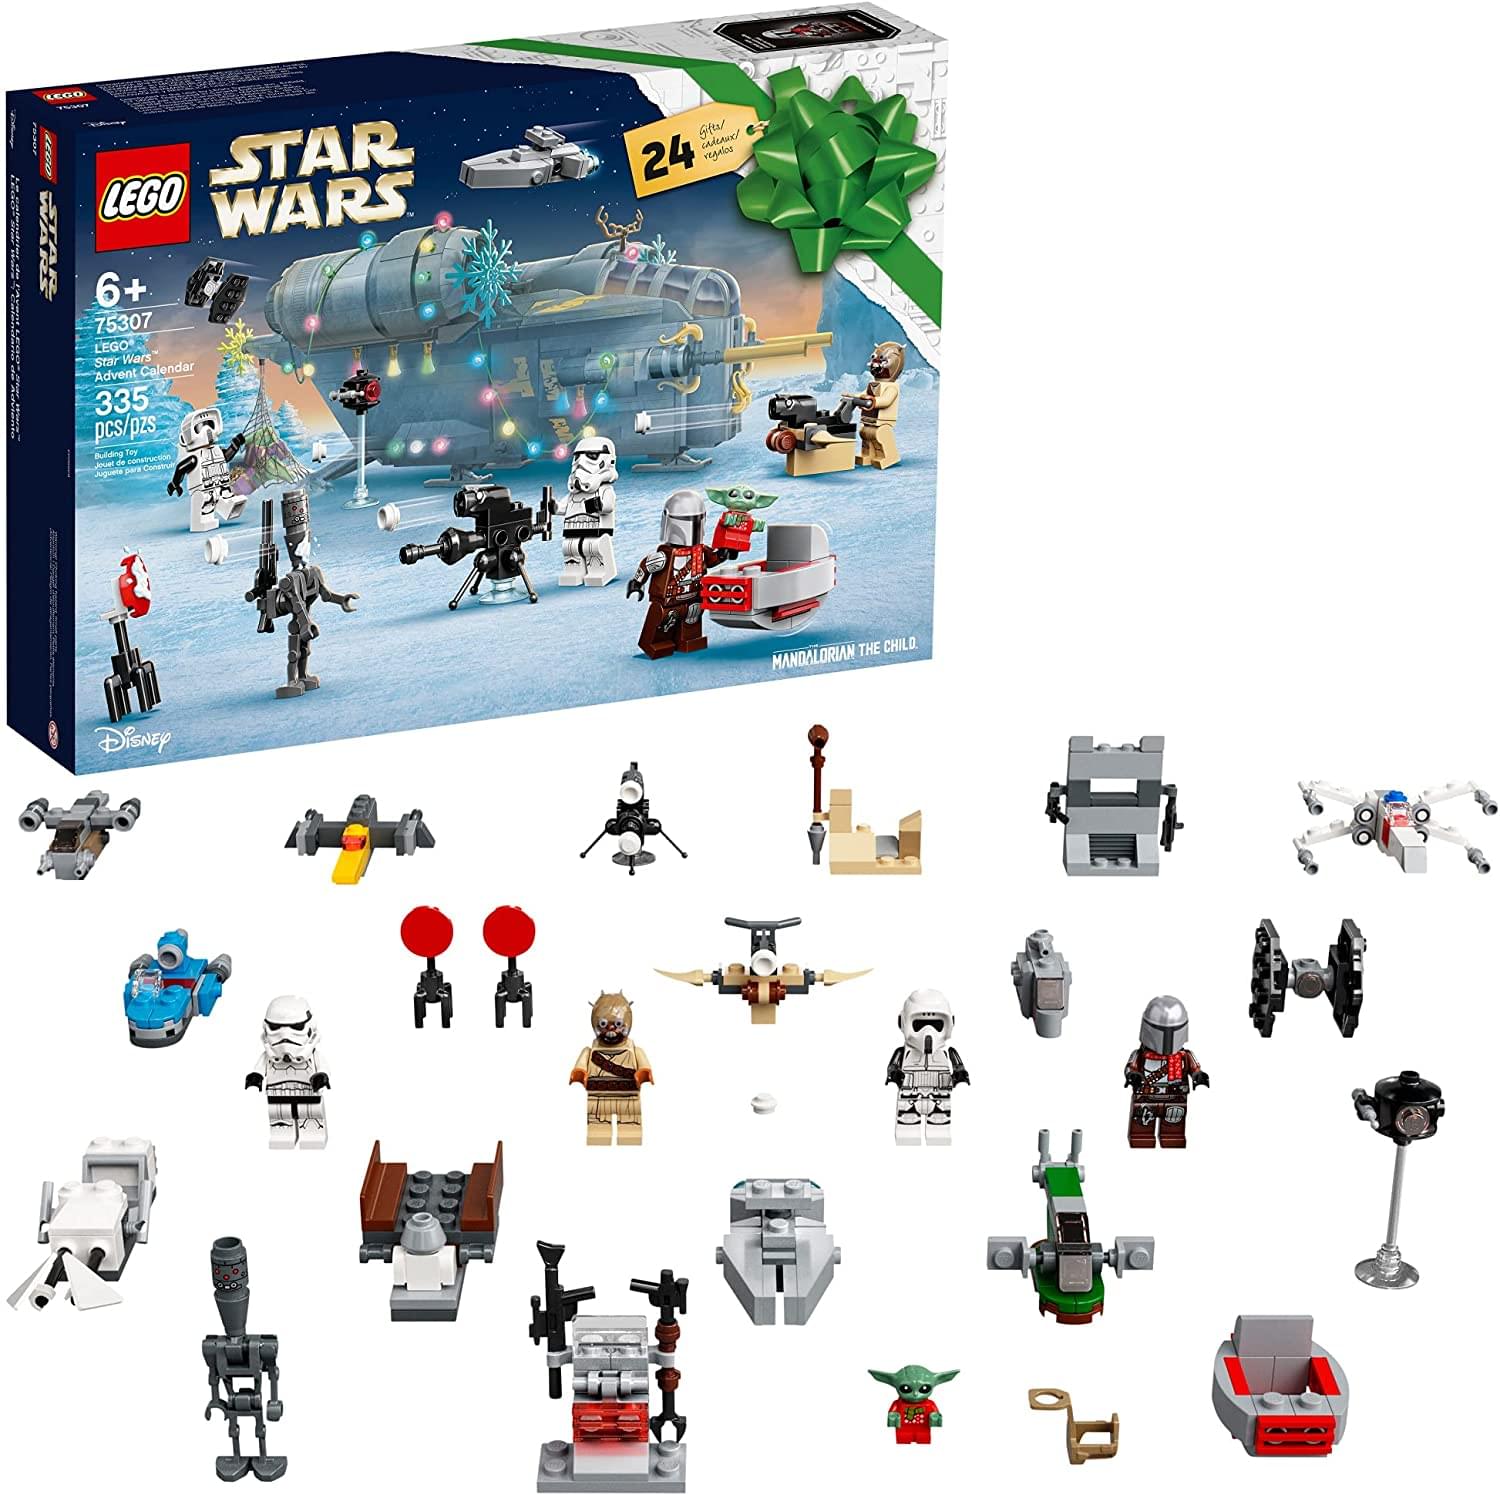 LEGO Star Wars 75307 Star Wars 2021 Advent Calendar 335 Piece Set